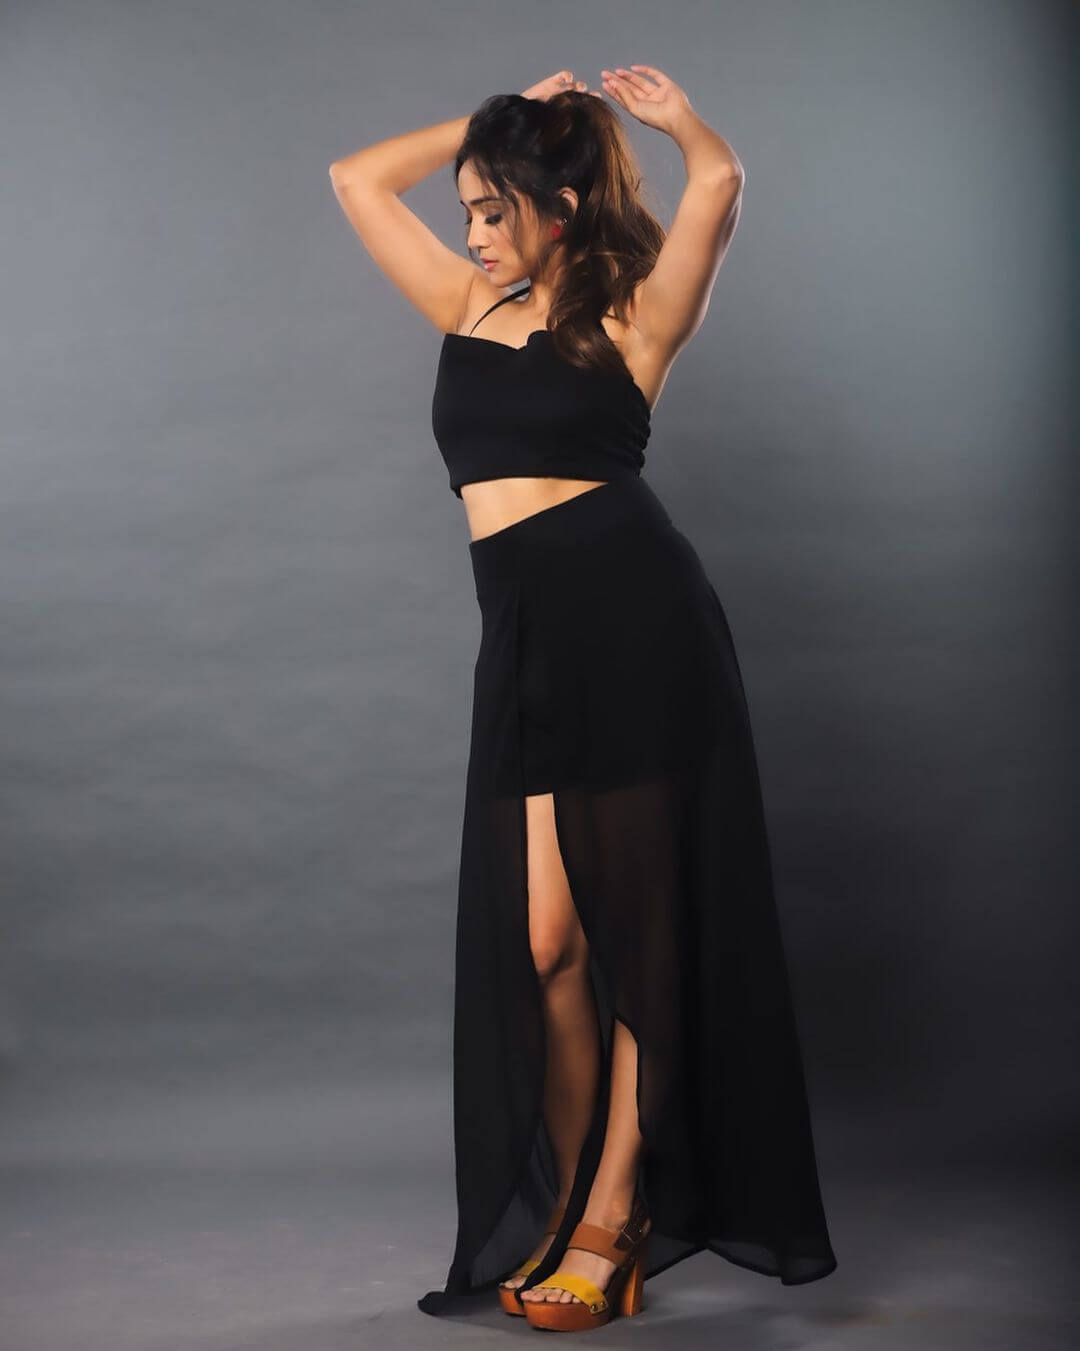 Ashi Singh Tempting Look In Black Multi-Cut Dress Outfit